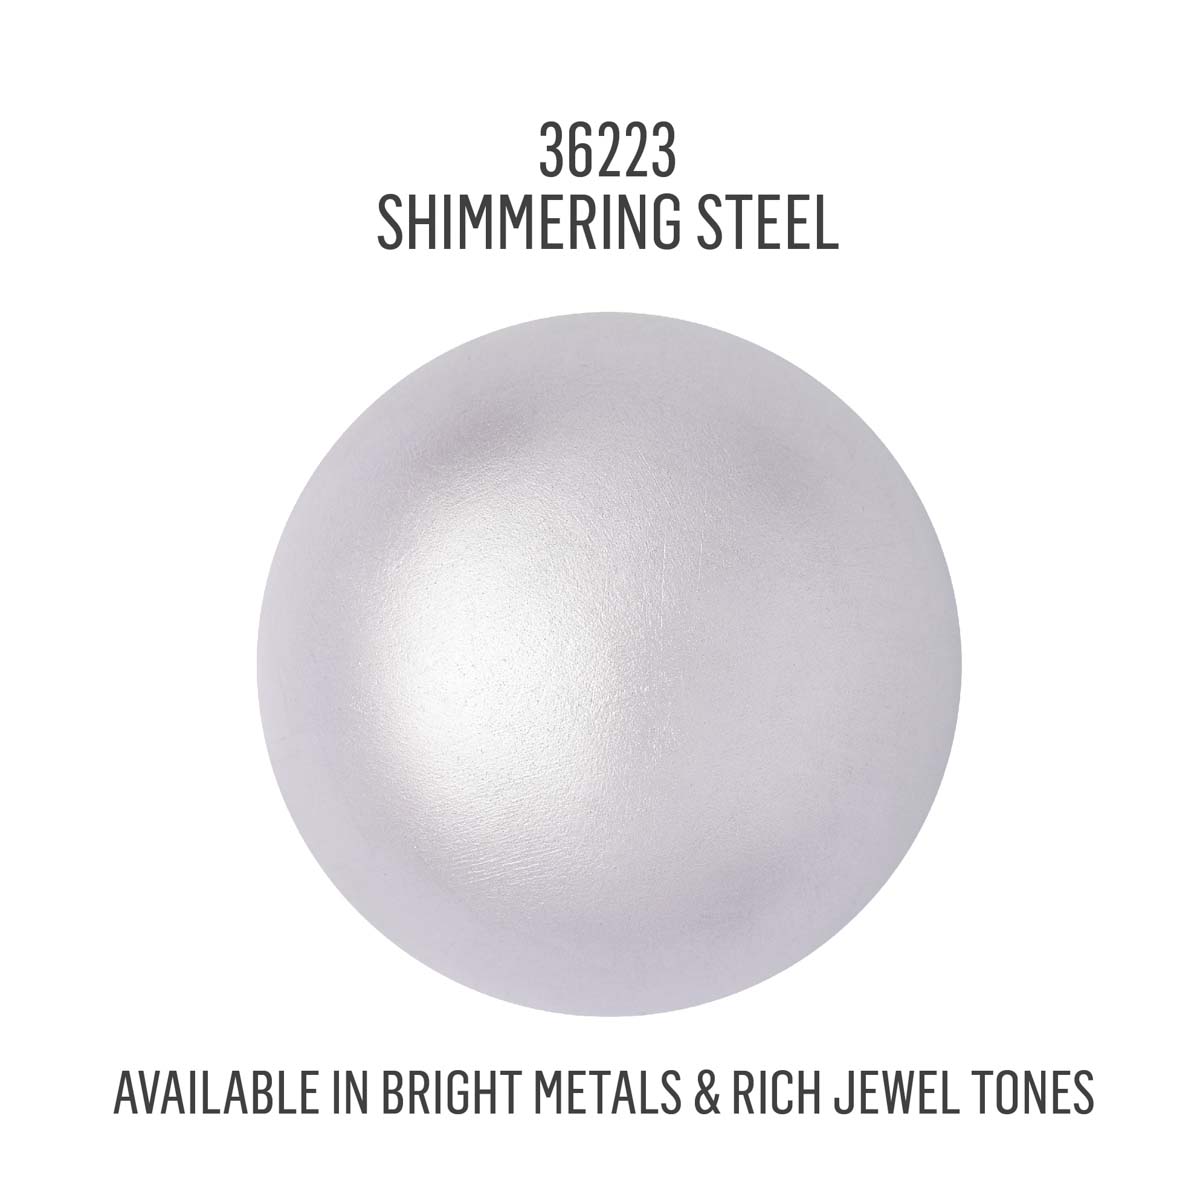 FolkArt ® Metallics - Shimmering Steel, 2 oz. - 36223